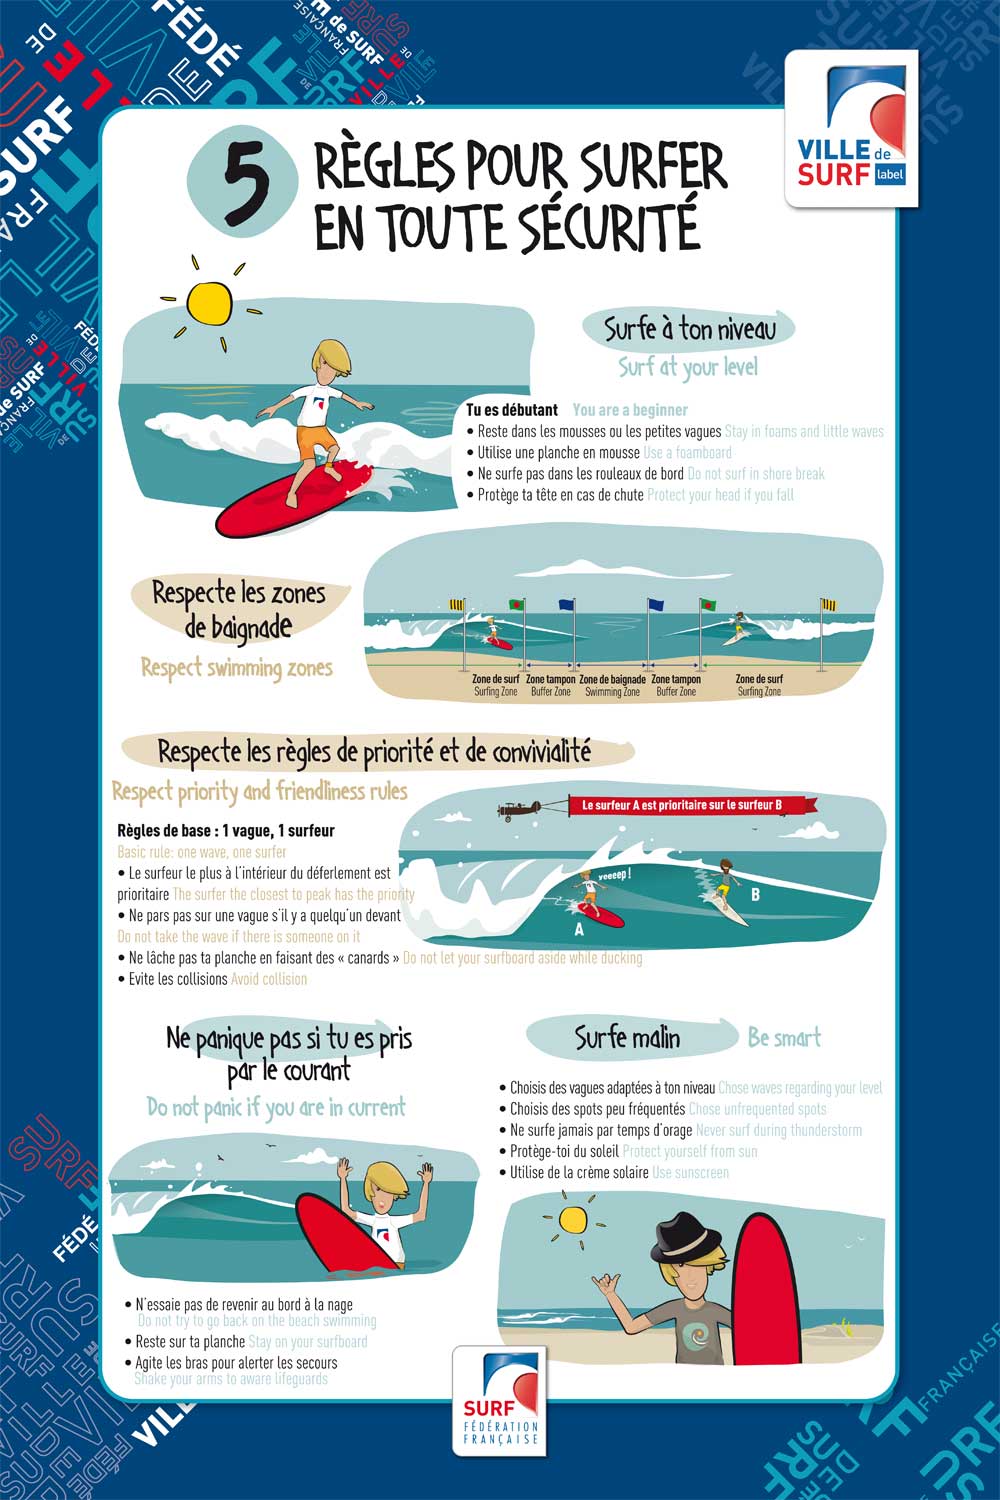 regle surfer securite seignosse